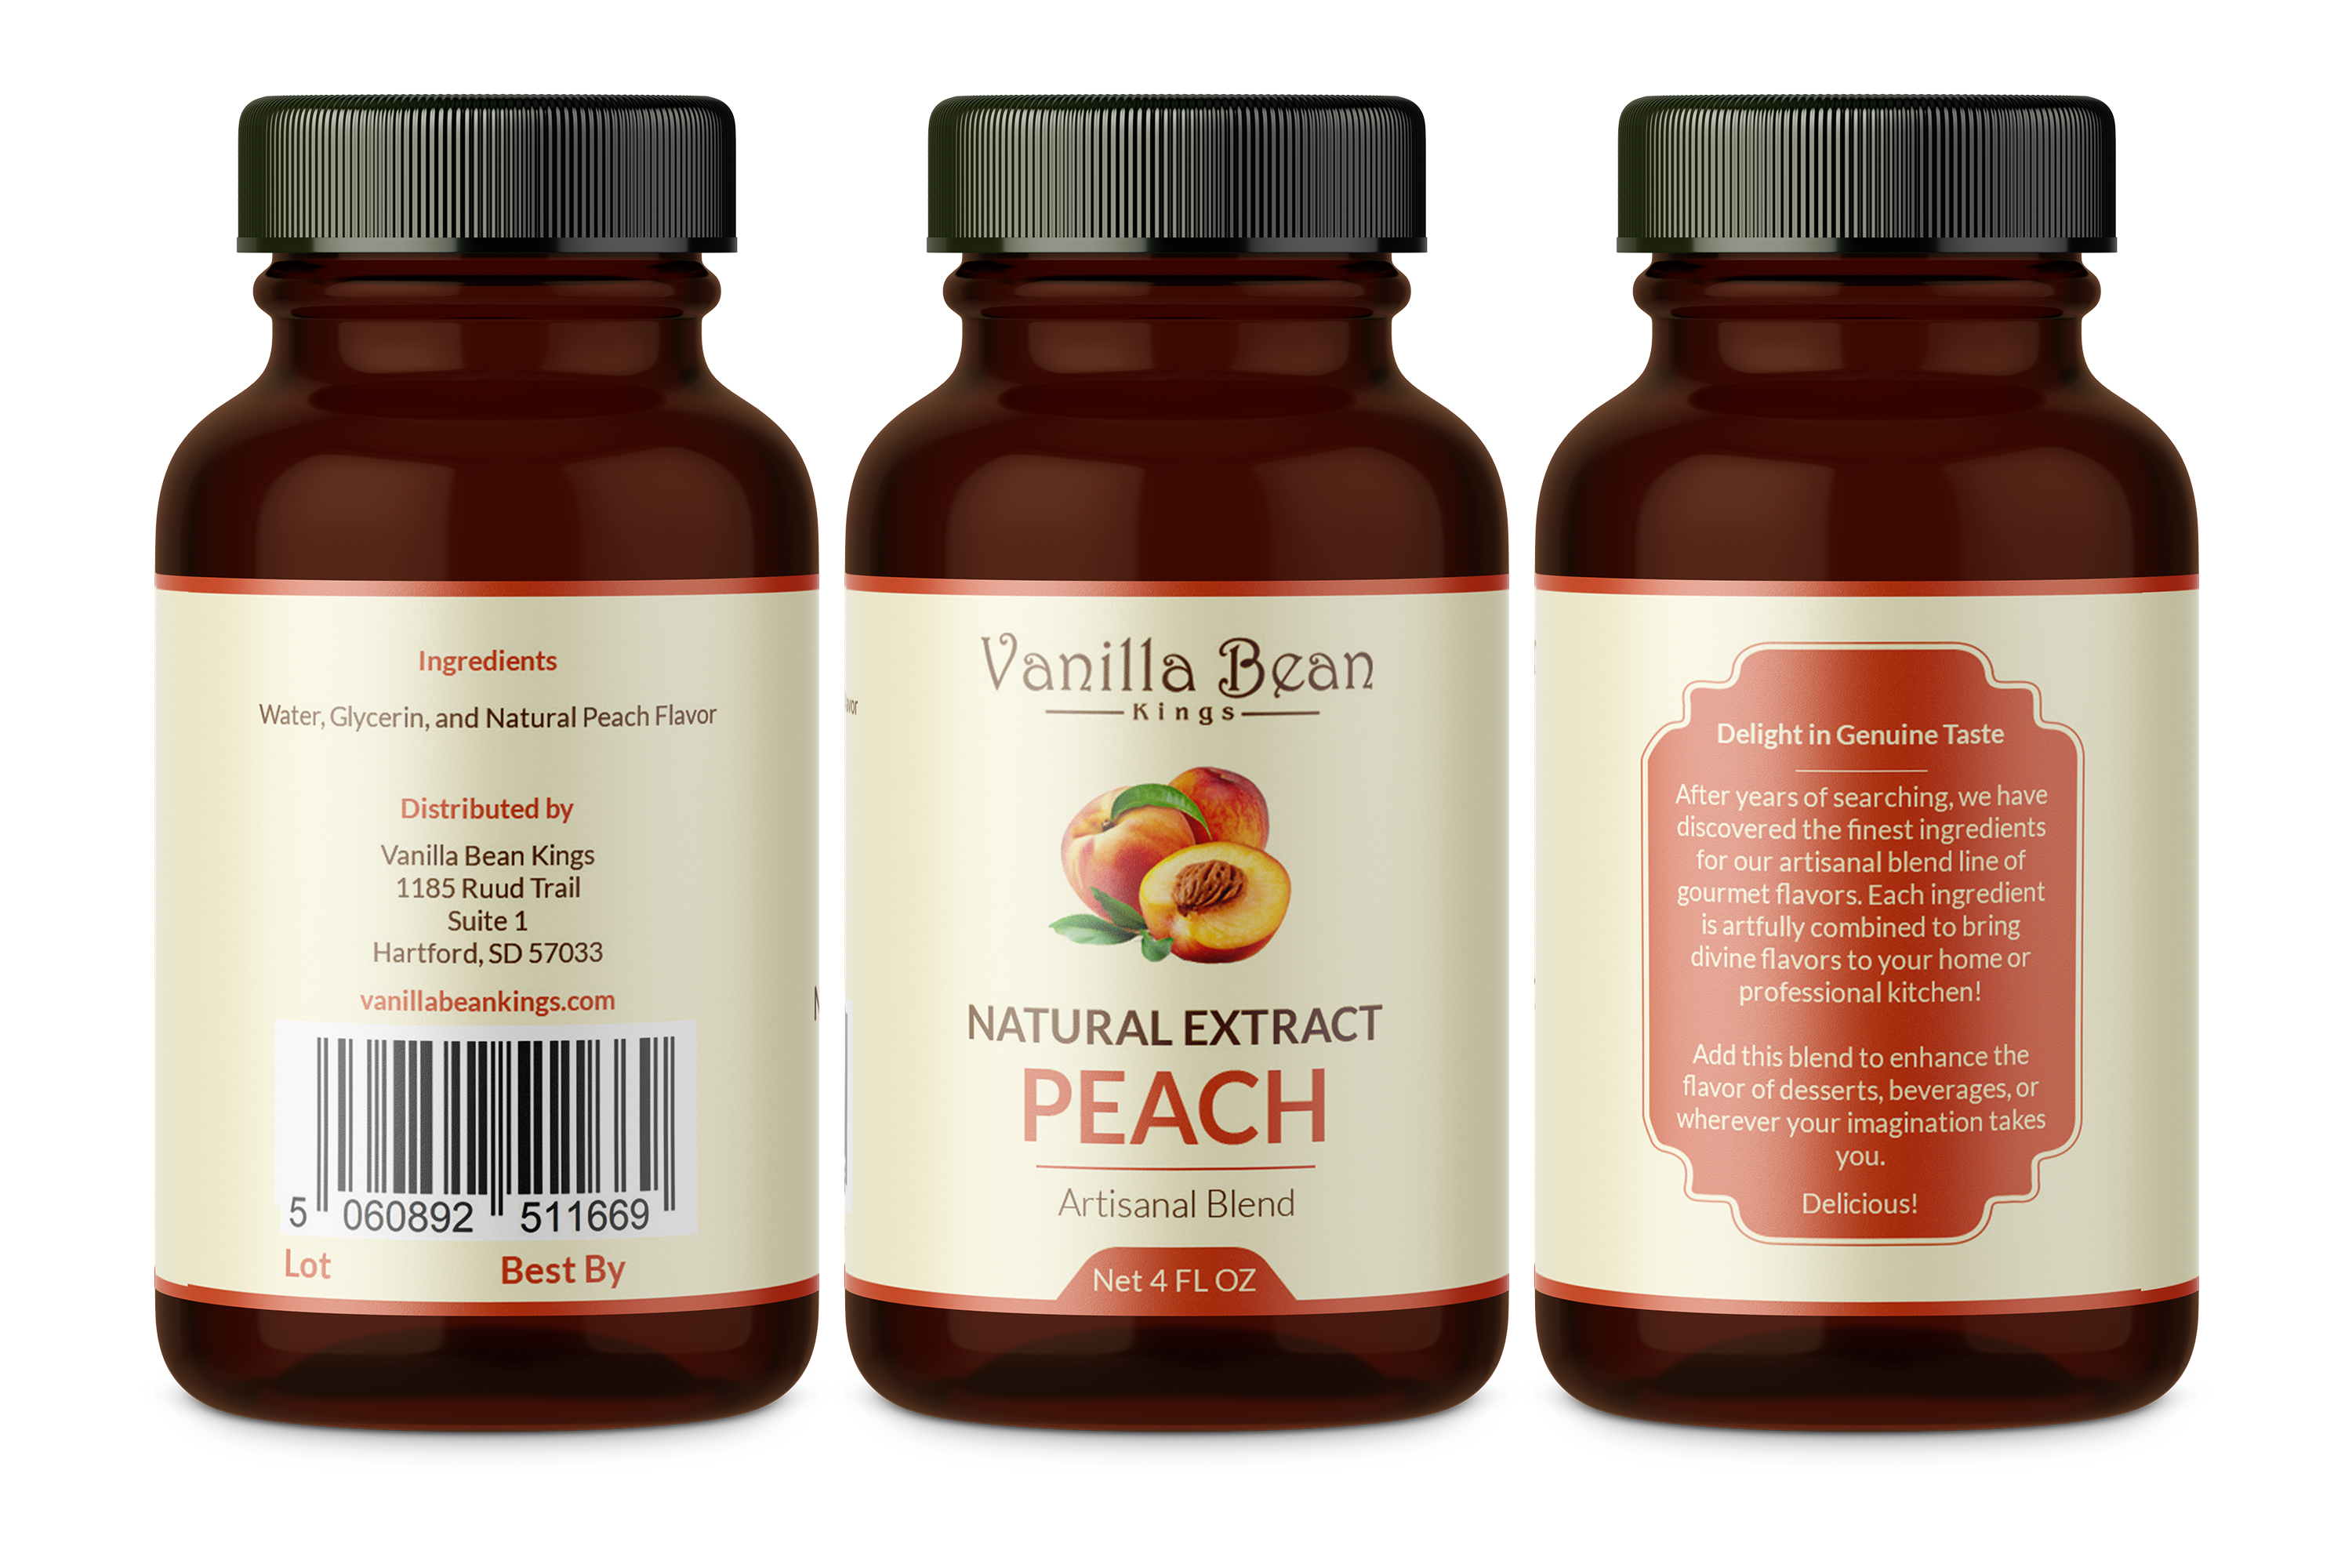 peach extract 4 oz bottle label